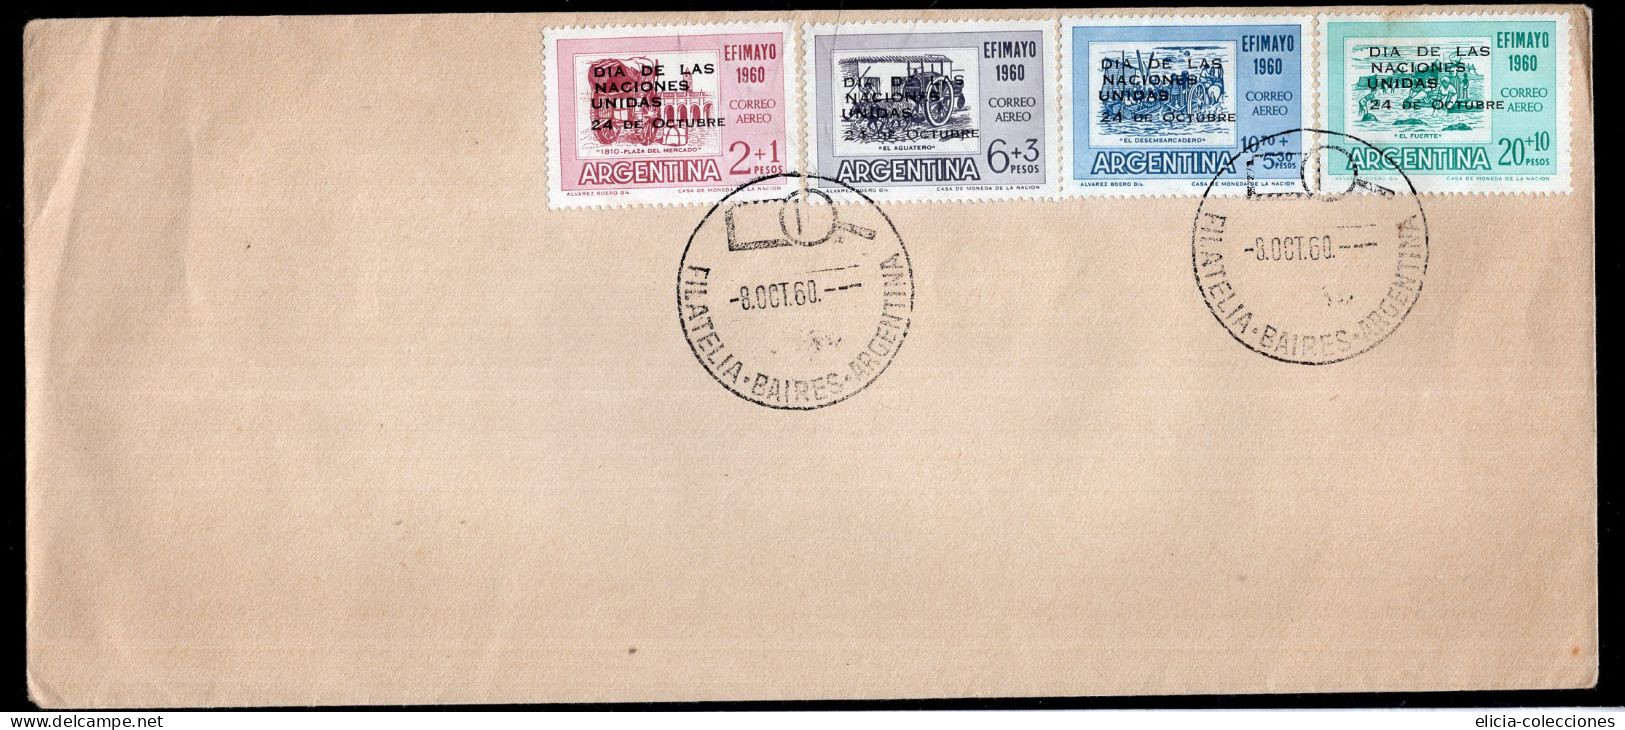 Argentina - 1960 - Envelope - Philately Baires Postmark - Caja 1 - Used Stamps